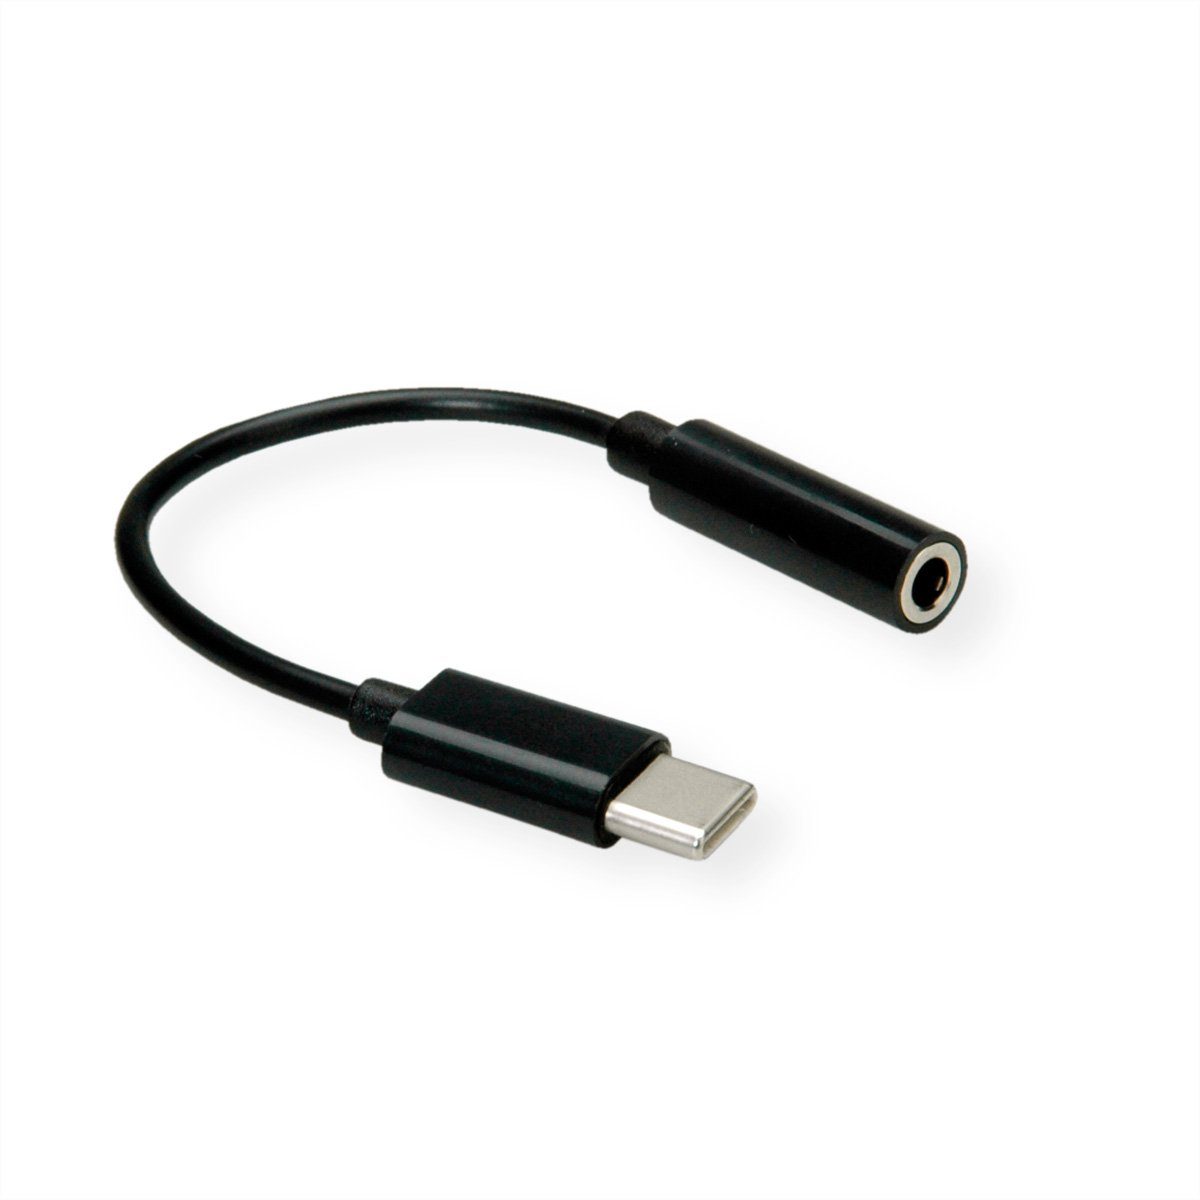 Hama Aux-Adapter USB-C - 3,5-mm-Klinke-Buchse Weiß kaufen bei OBI